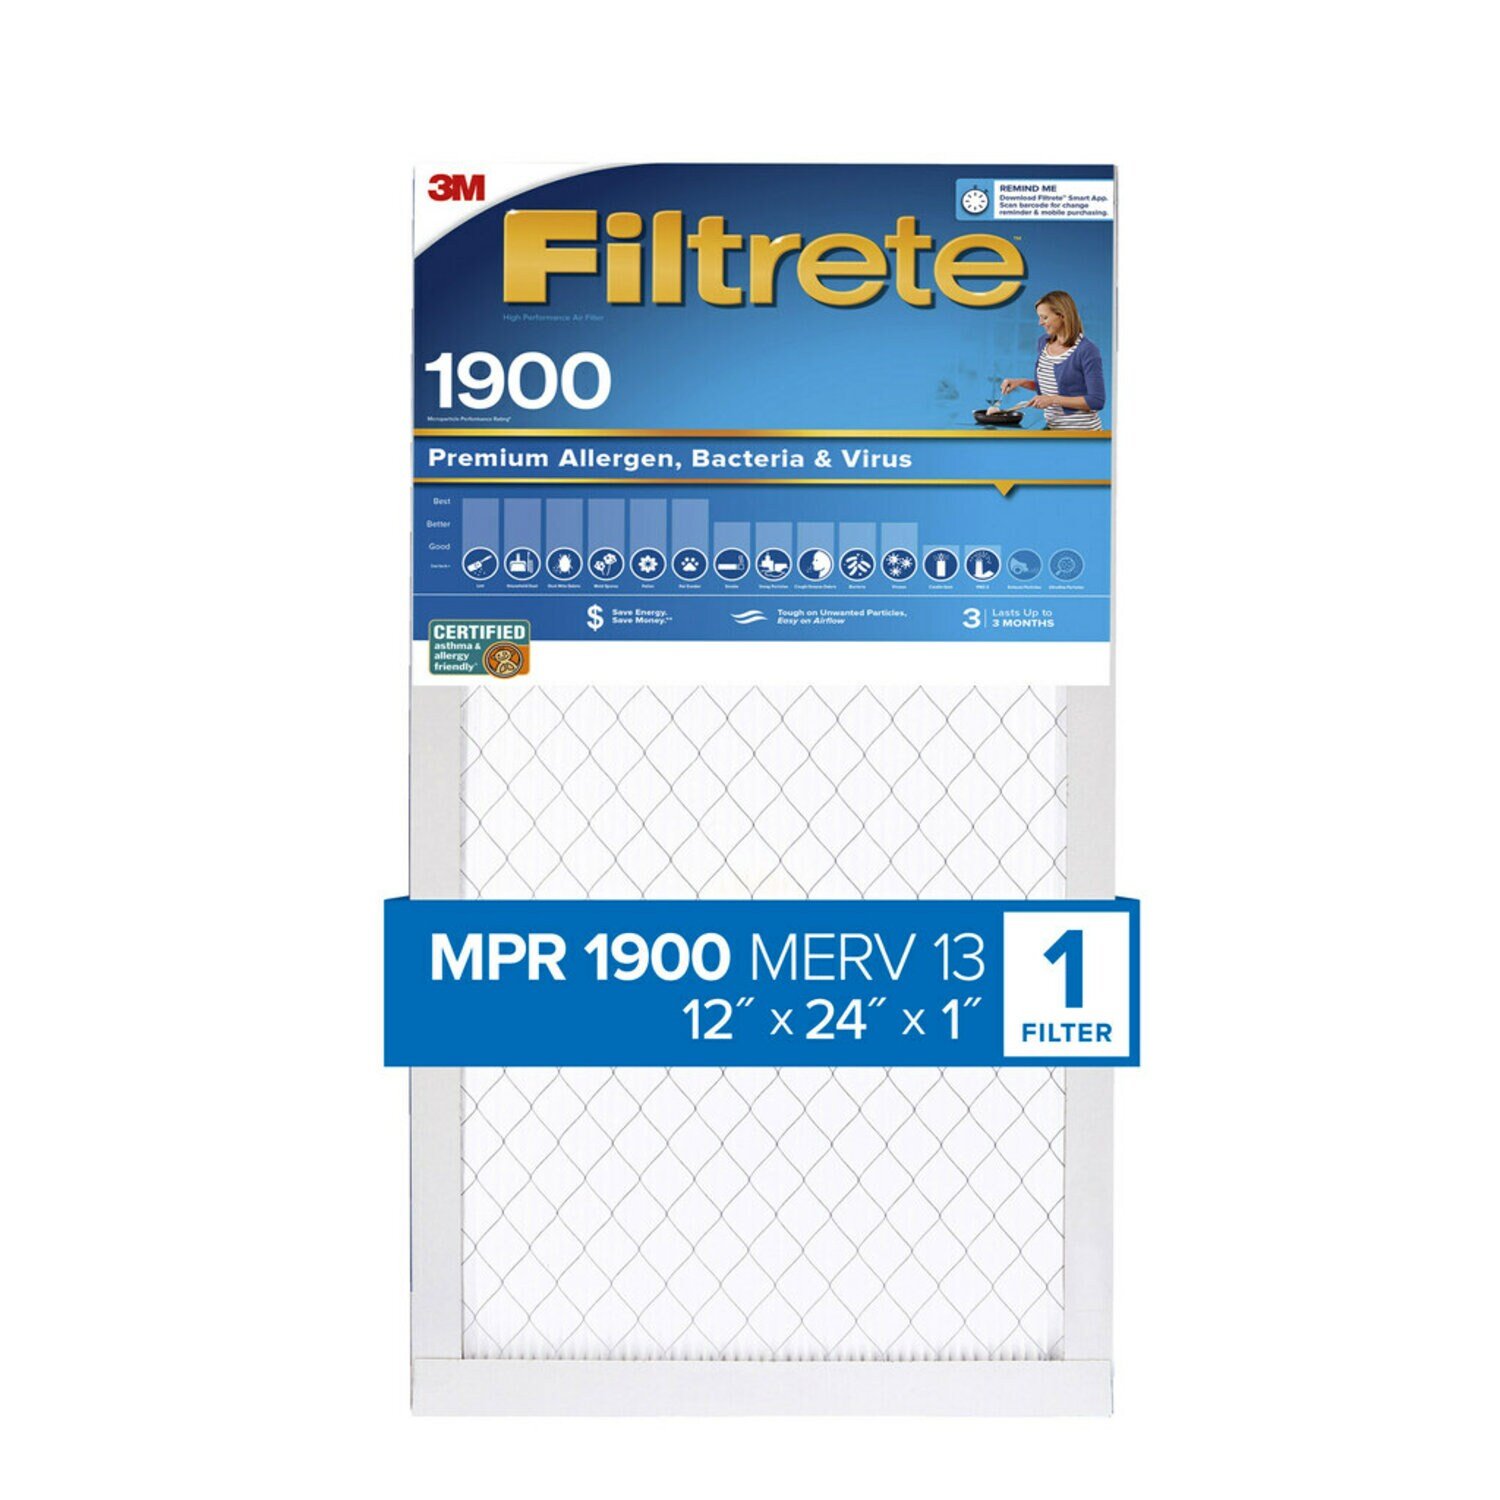 7100220151 - Filtrete High Performance Air Filter 1900 MPR UT20-4, 12 in x 24 in x 1 in (30.4 cm x 60.9 cm x 2.5 cm)